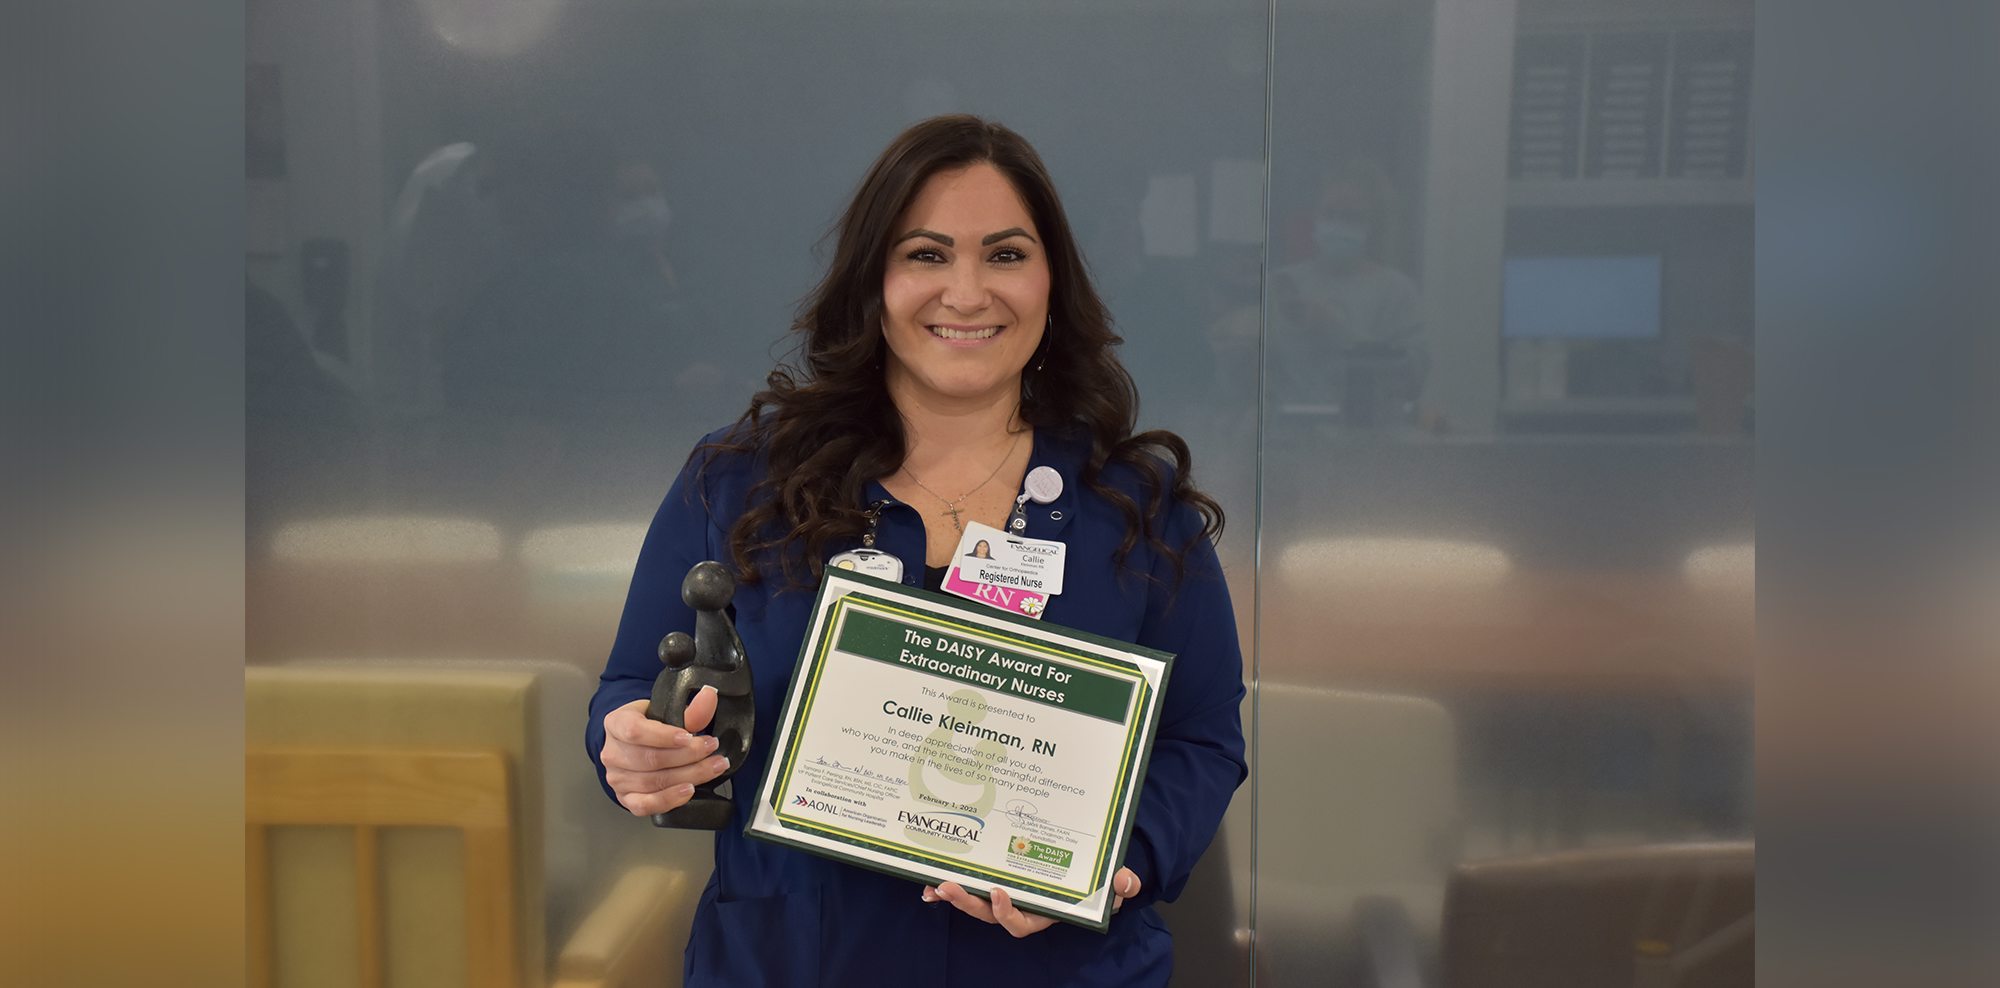 Evangelical Community Hospital Awards DAISY Honor for Nursing Excellence to Callie Kleinman, RN